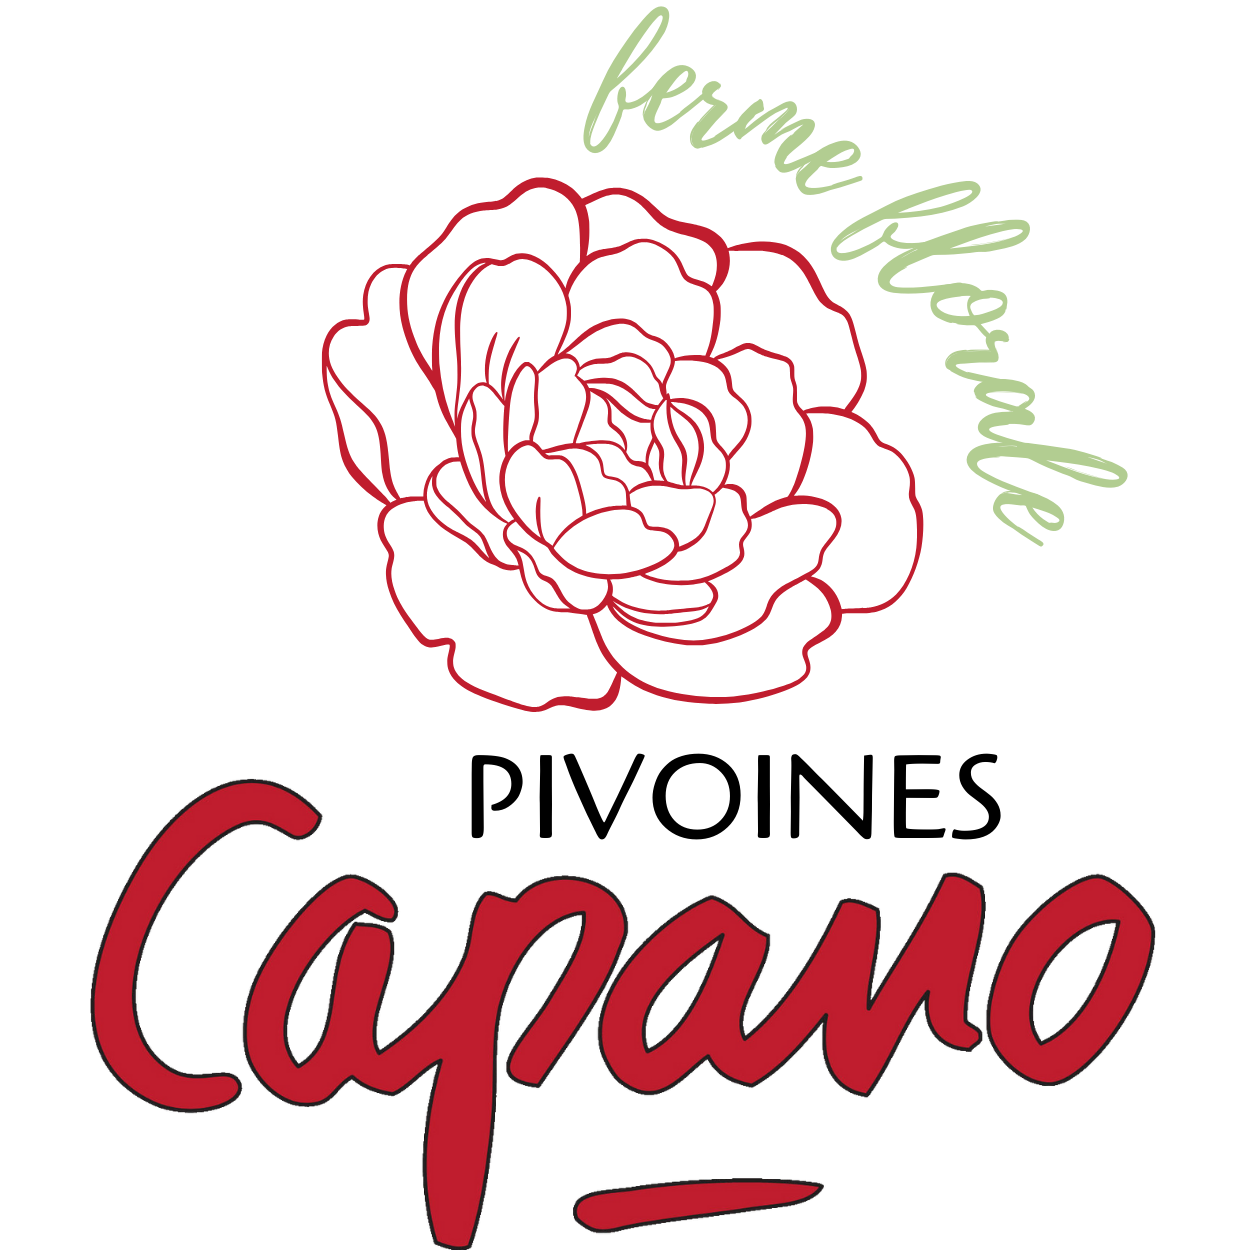 Pivoines Capano